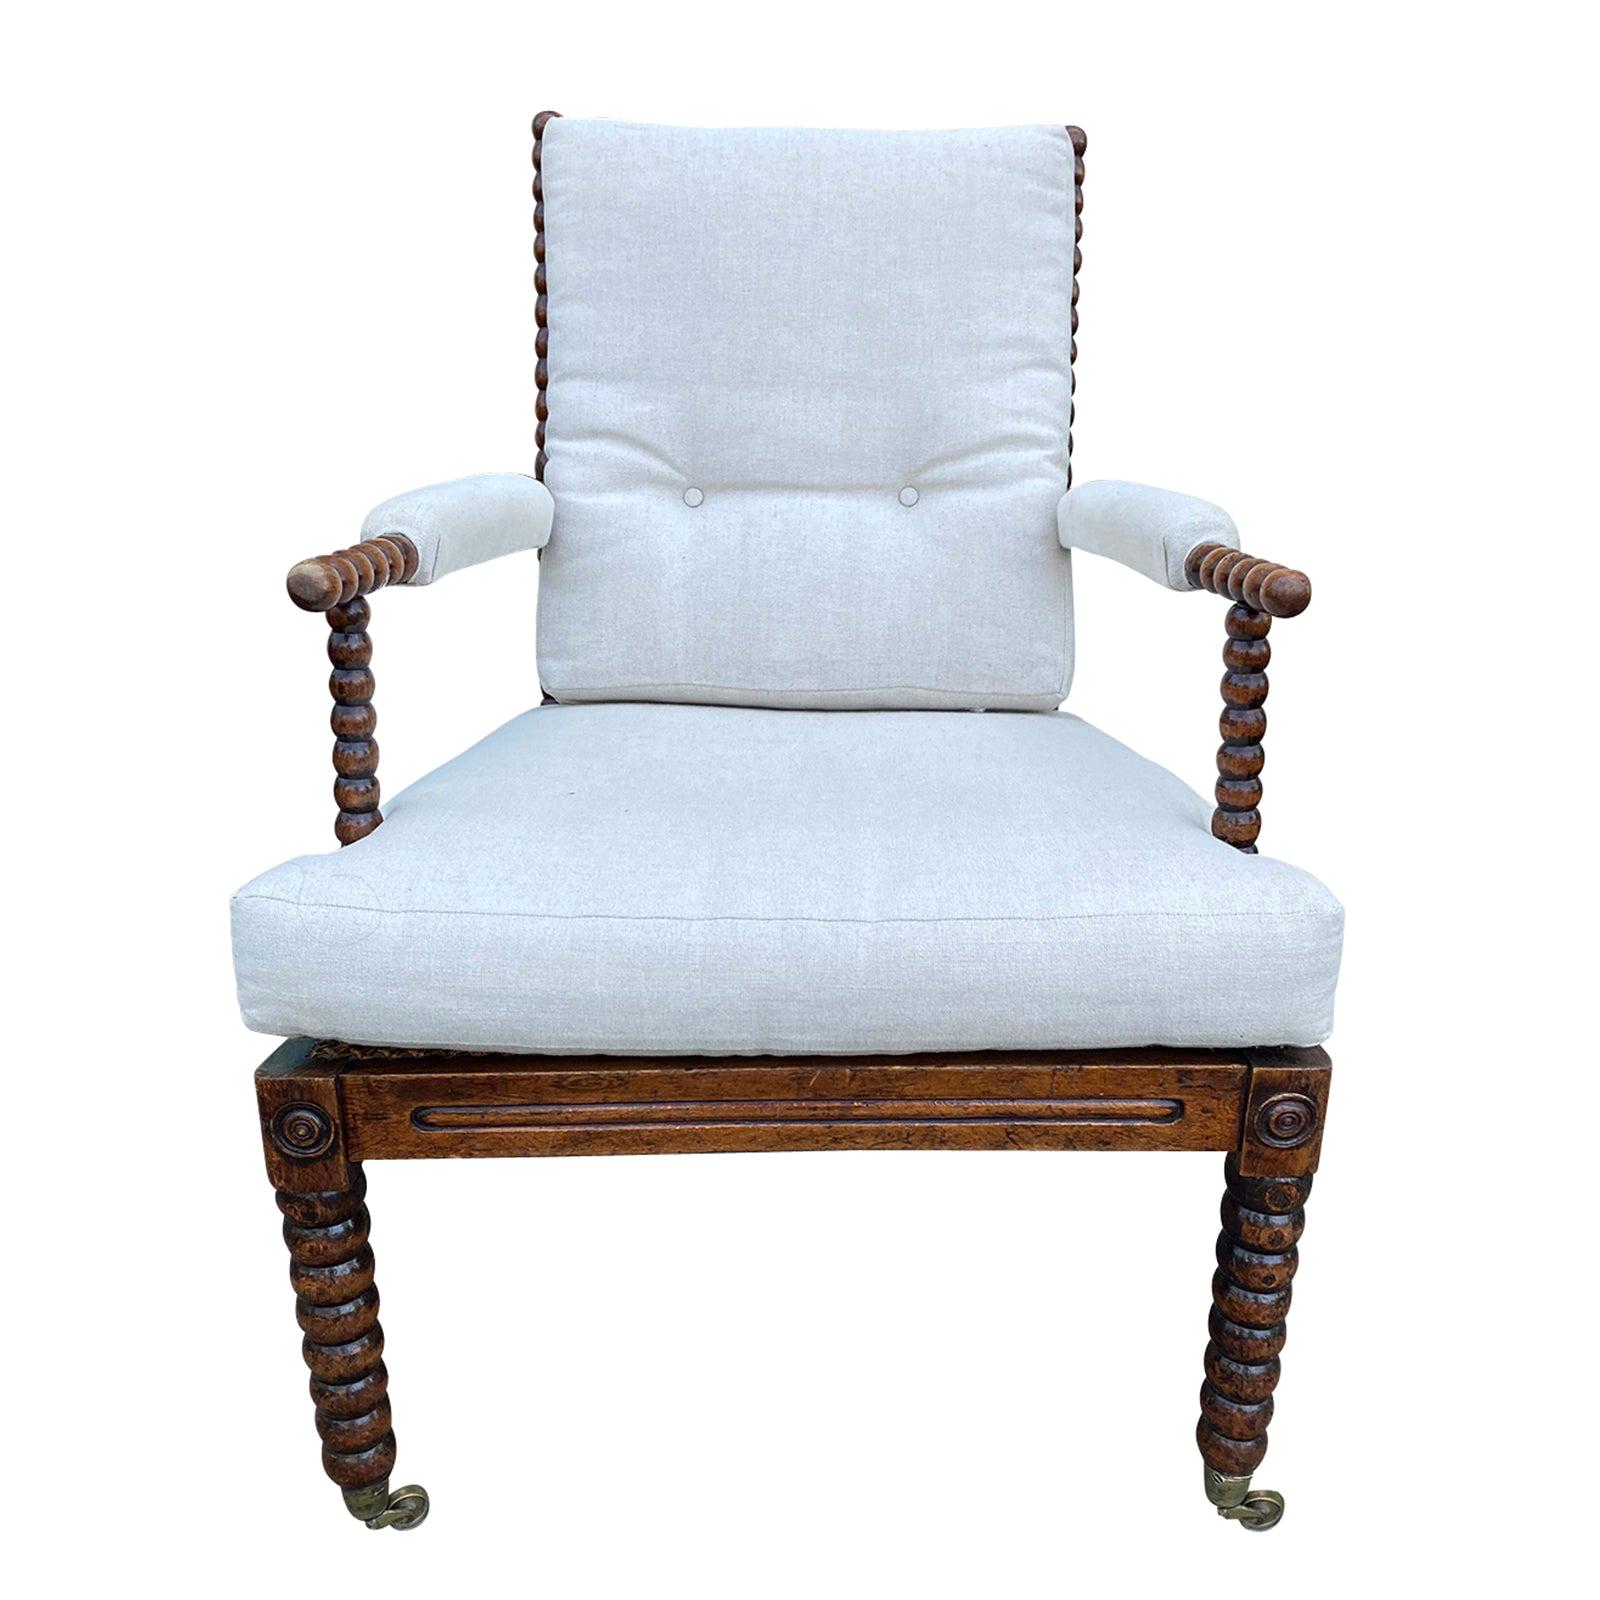 Circa 1850 American Bobbin Chair